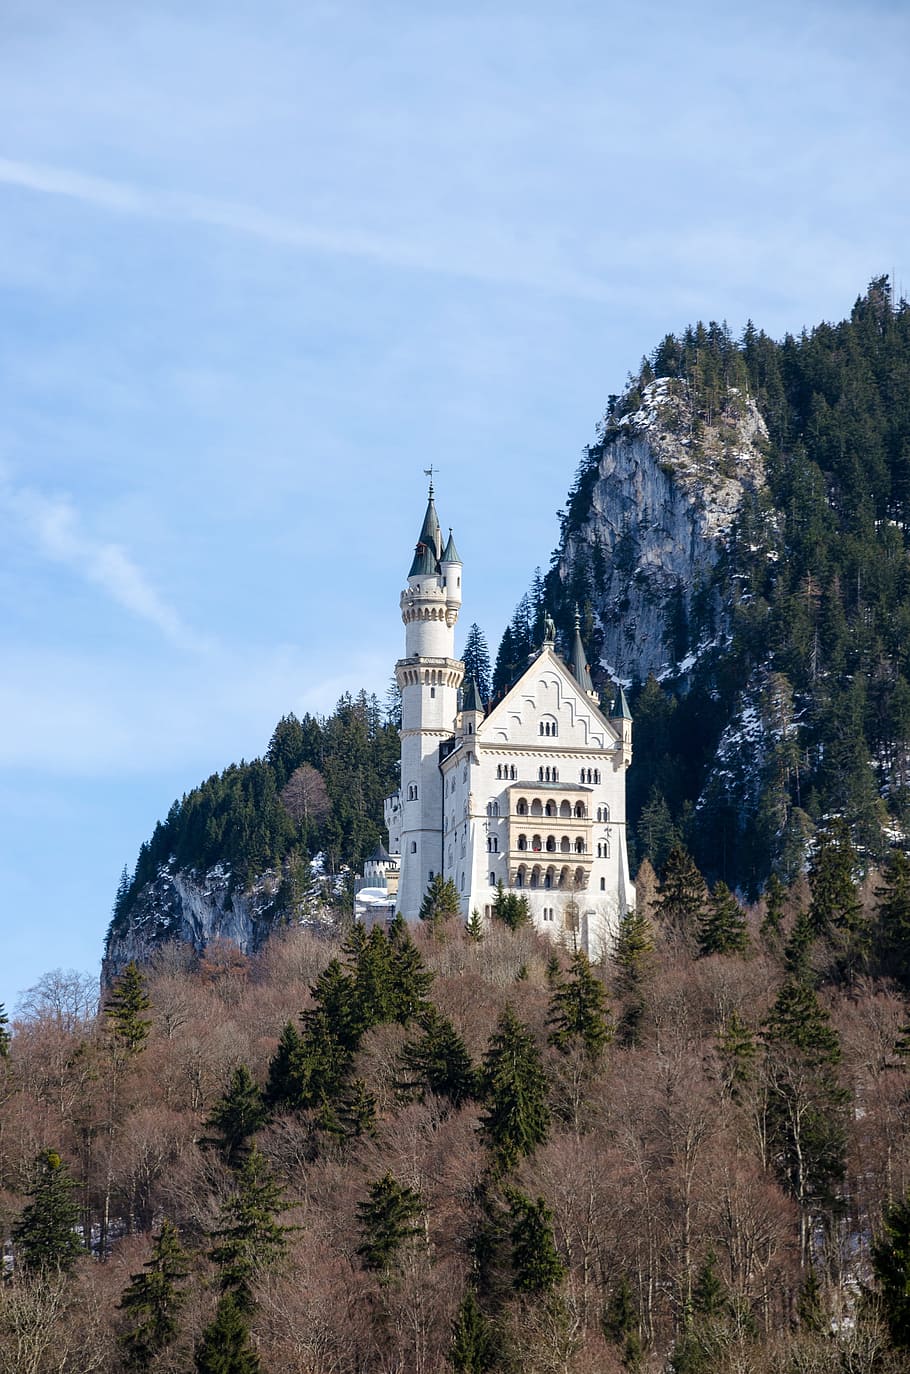 Alemania, Baviera, Castillo, Kristin, Castillo de hadas, Castillo de Neuschwanstein, lugares de interés, estructuras, históricamente, Schwangau